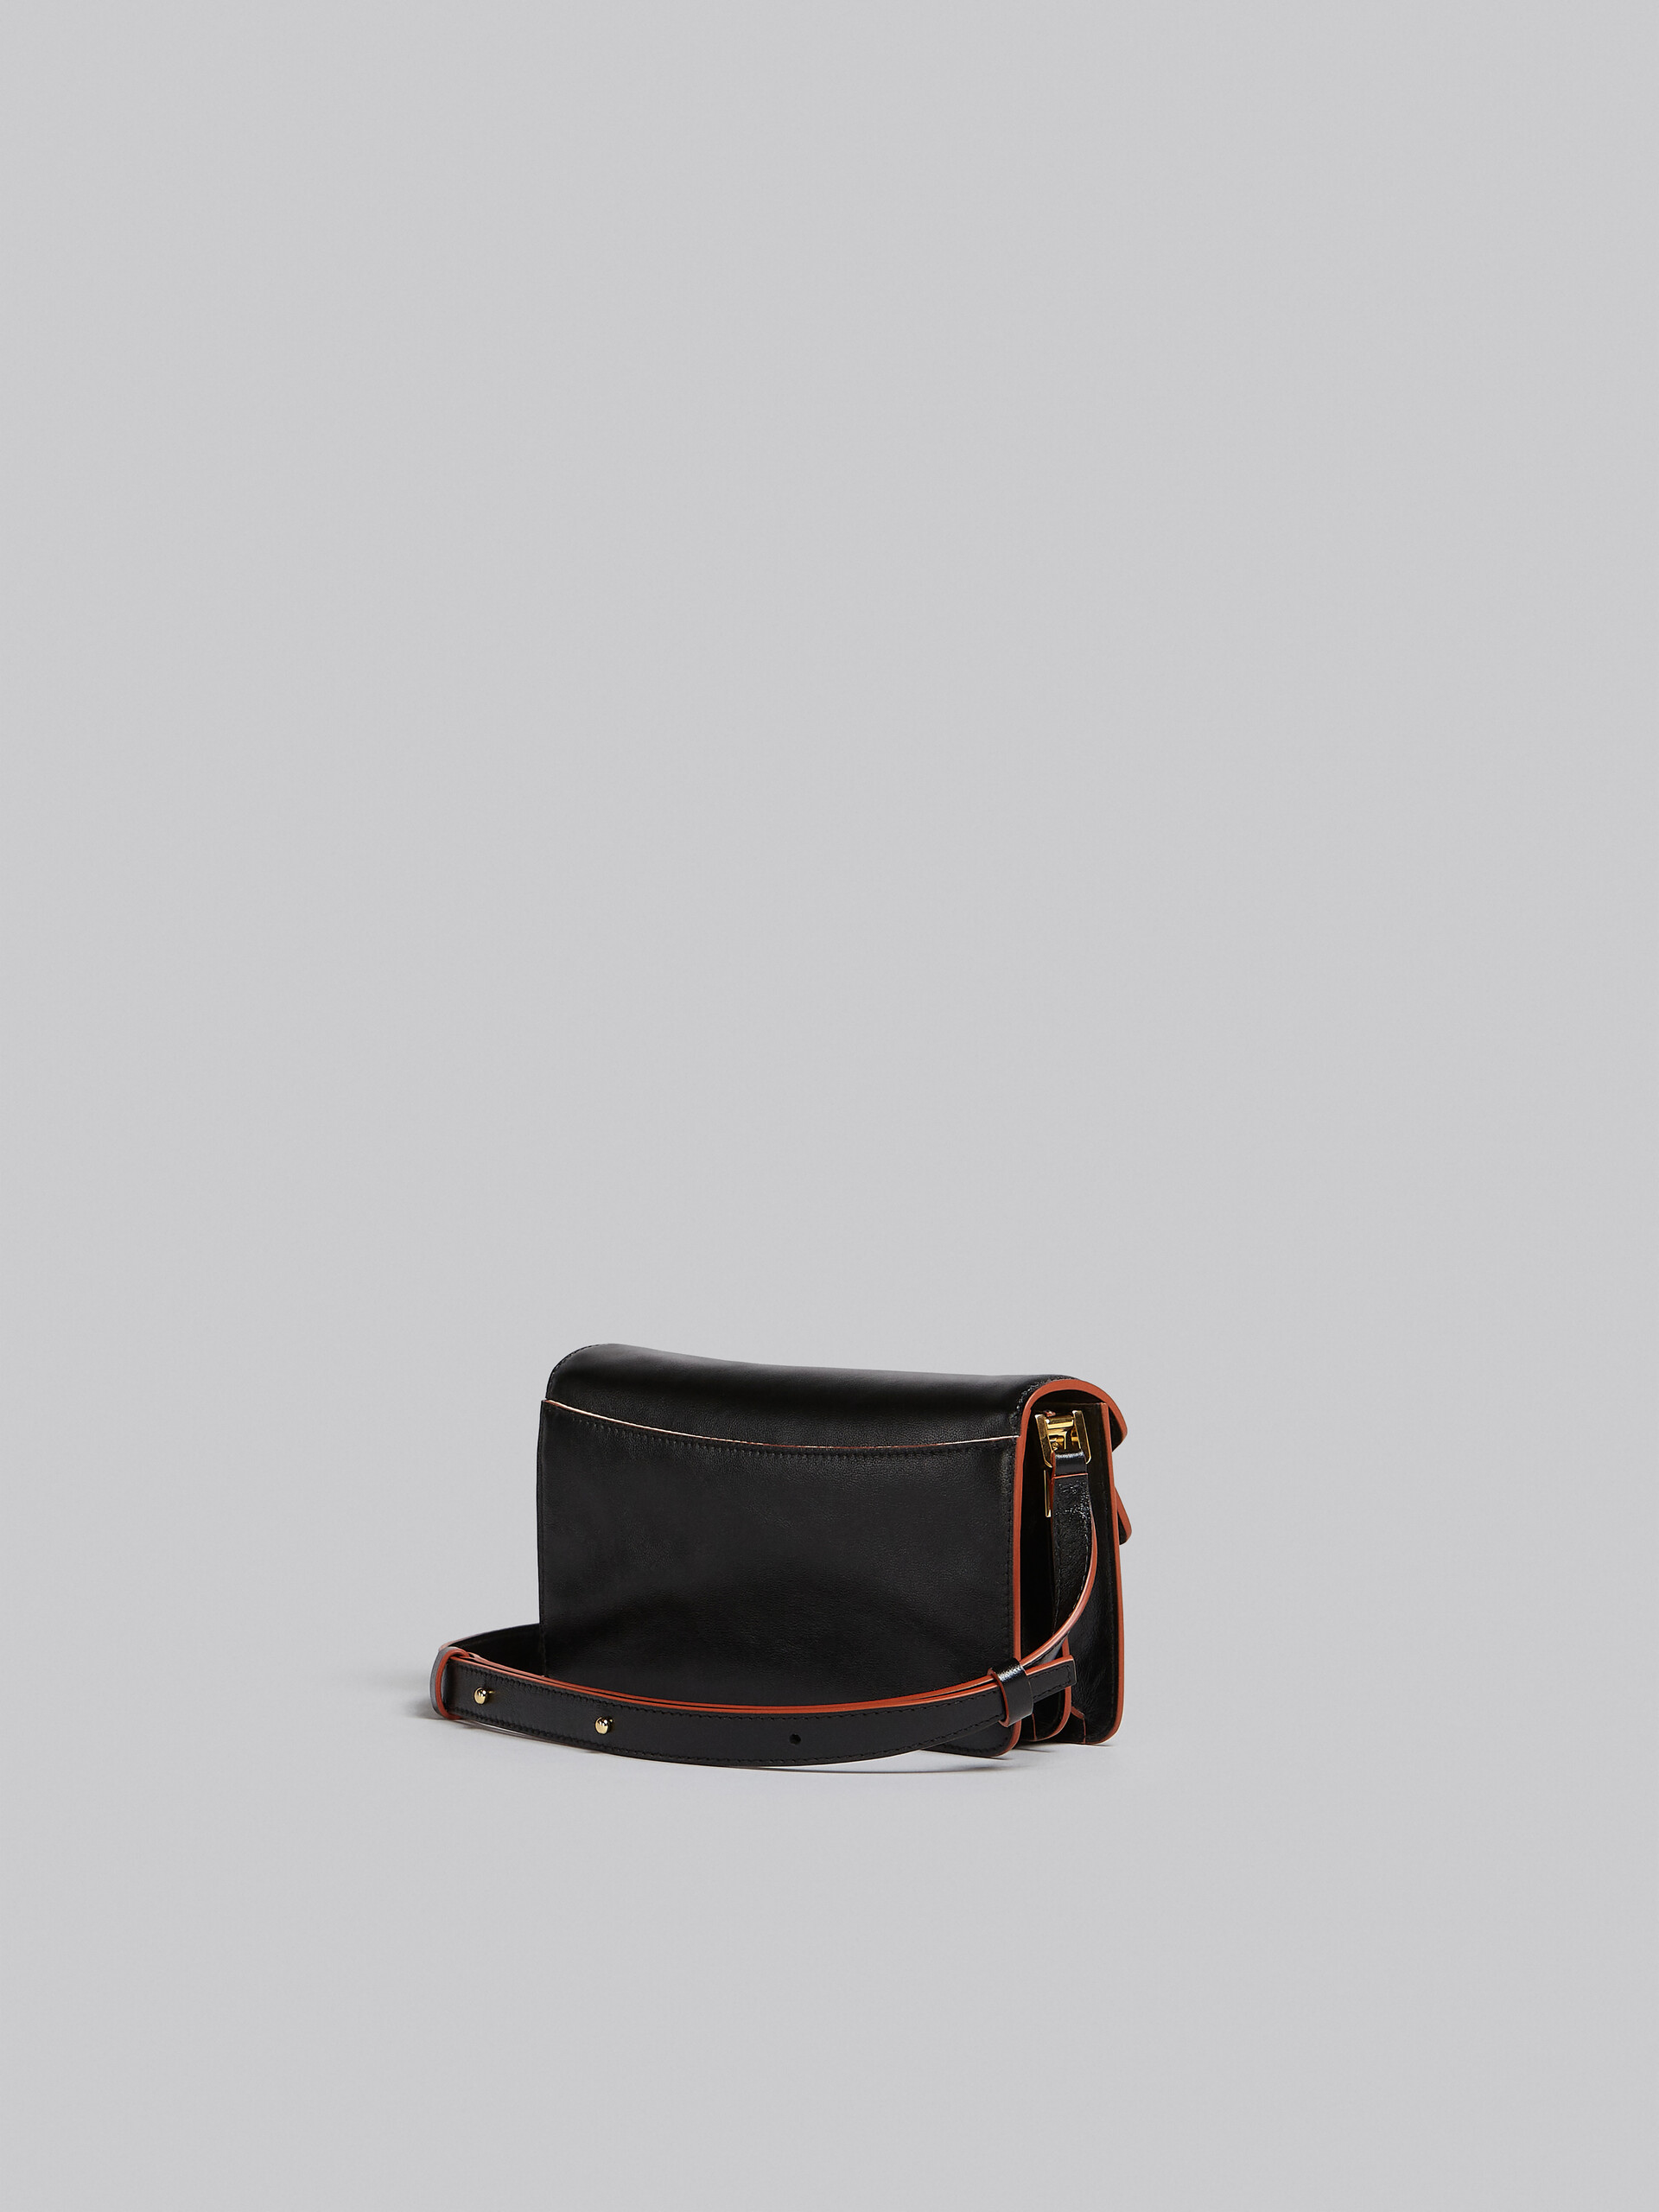 Trunk Soft Bag E/W in black leather - Shoulder Bags - Image 3